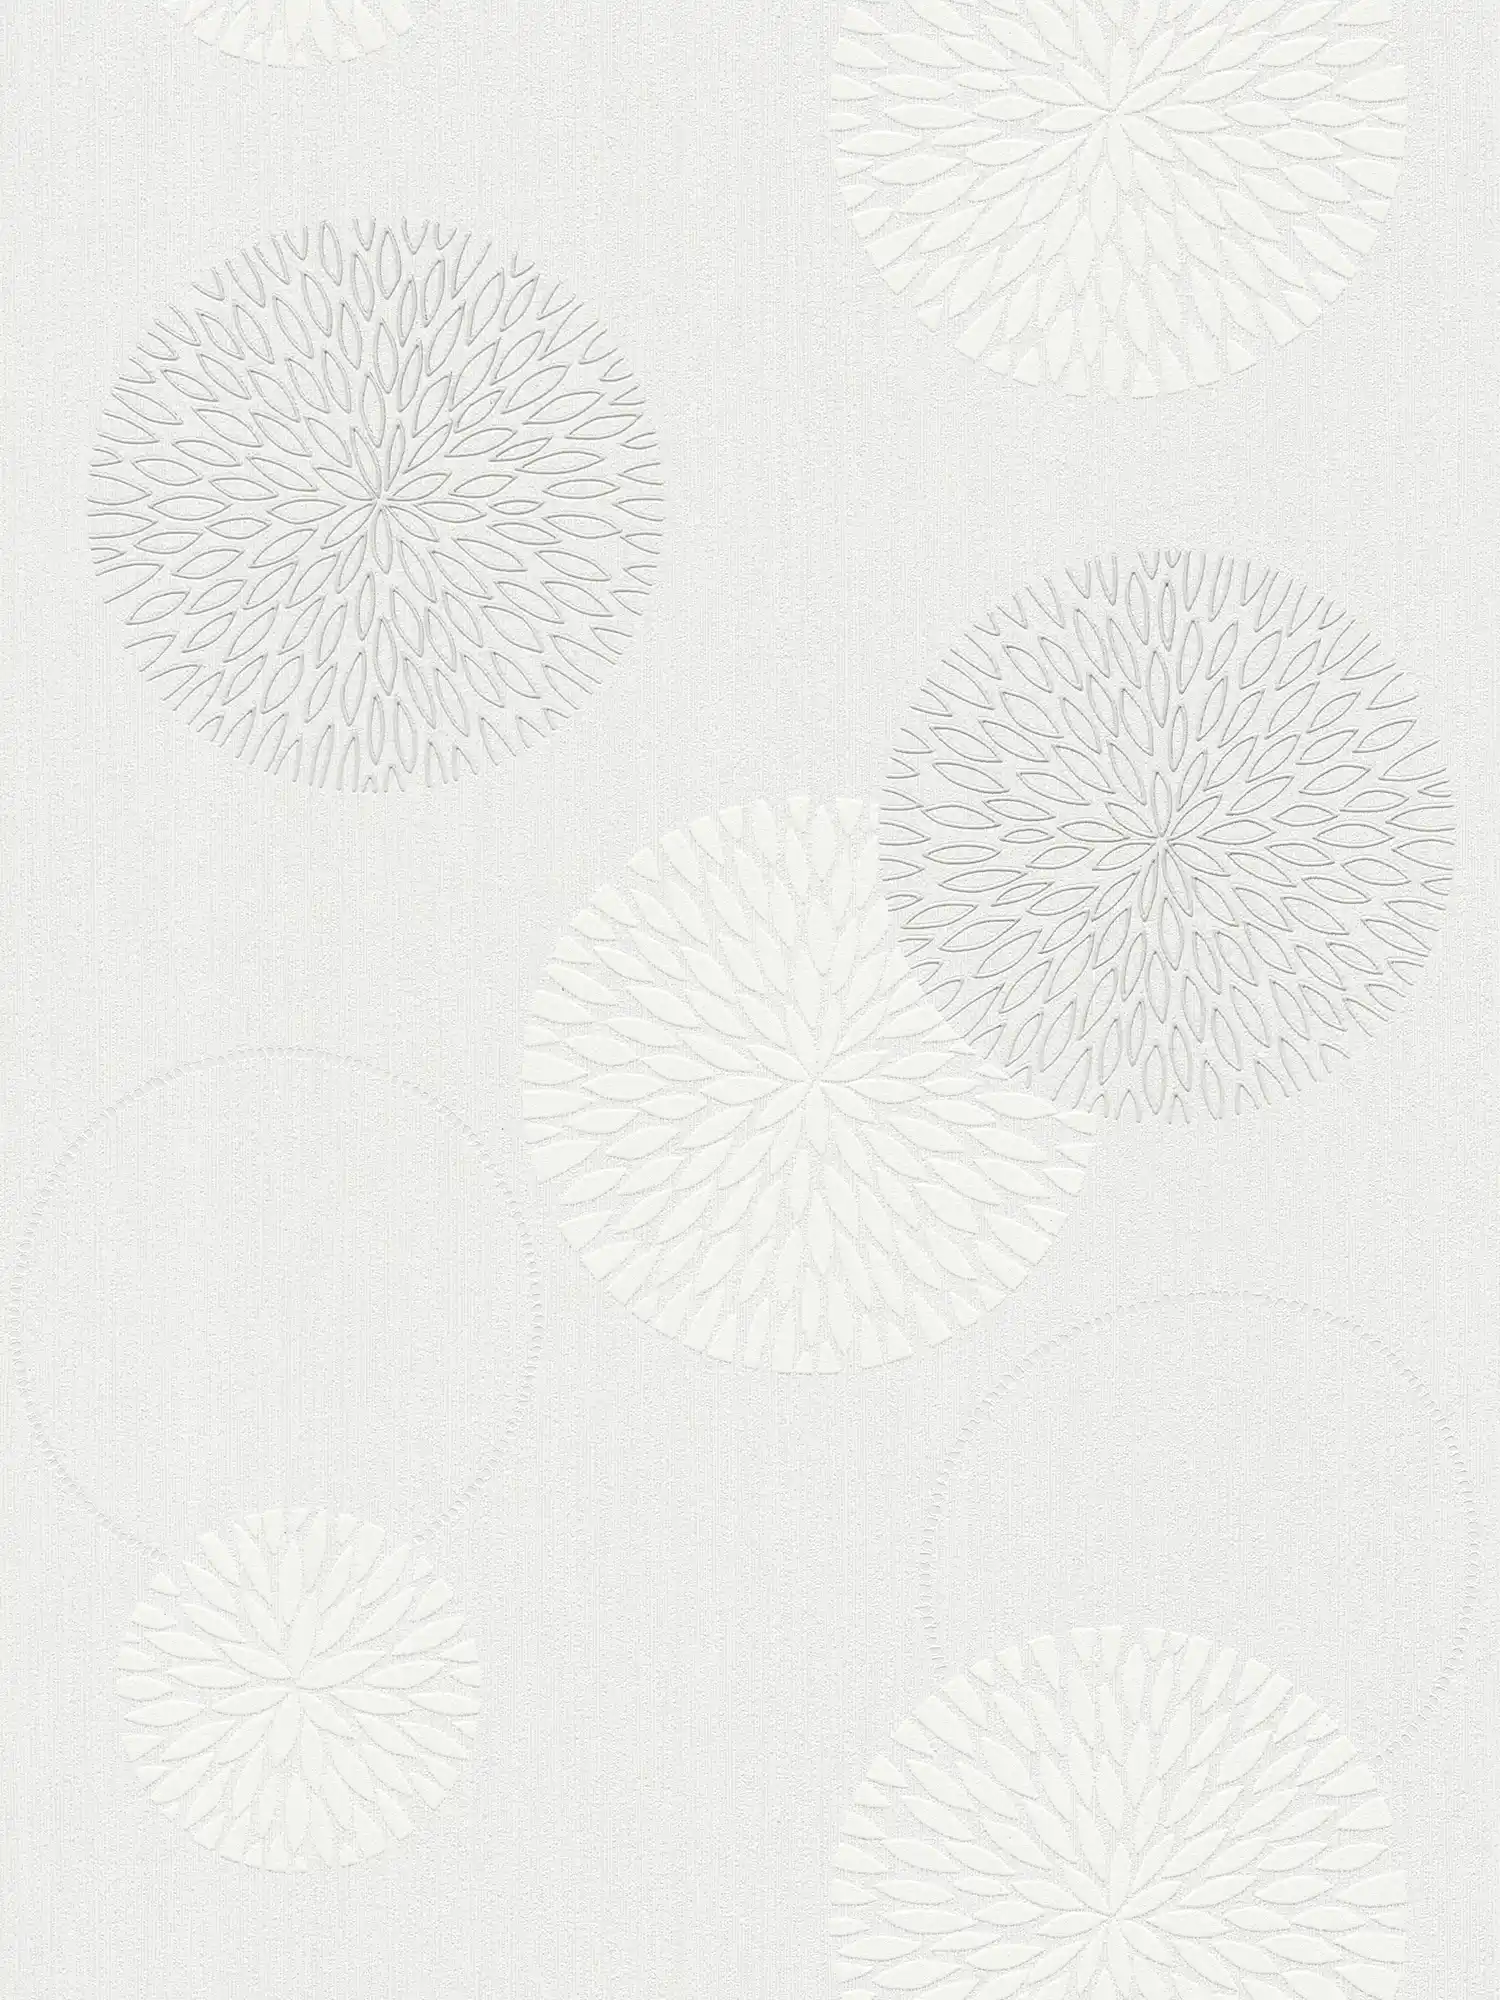         Non-woven wallpaper flowers in abstract design - cream, white
    